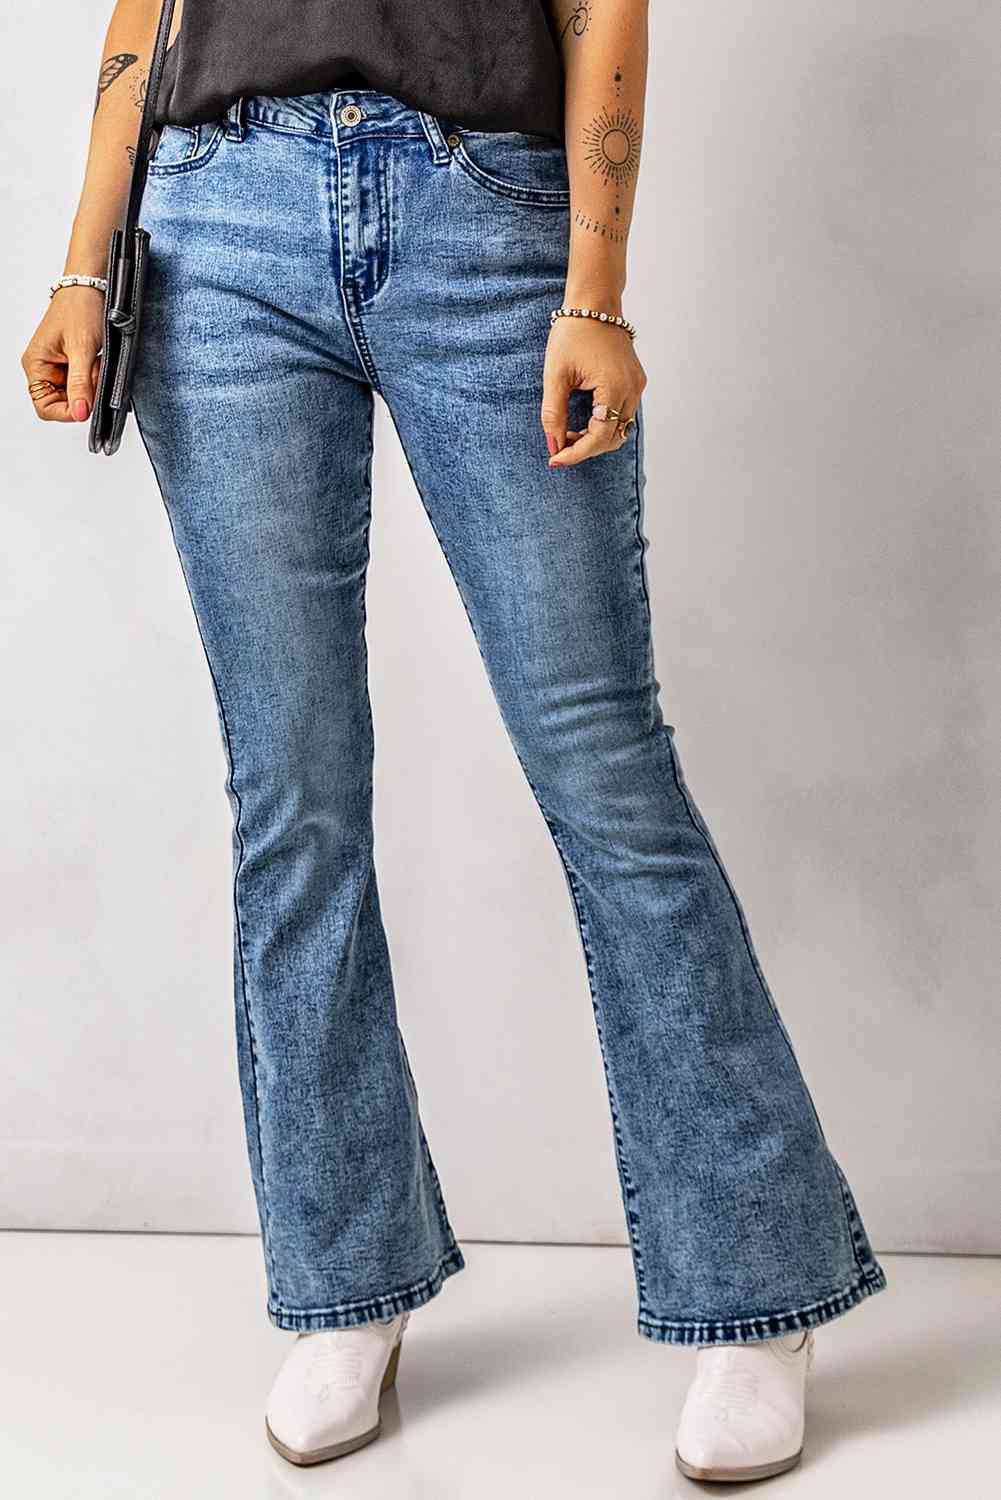 Baeful Vintage Wash Flare Jeans with Pockets